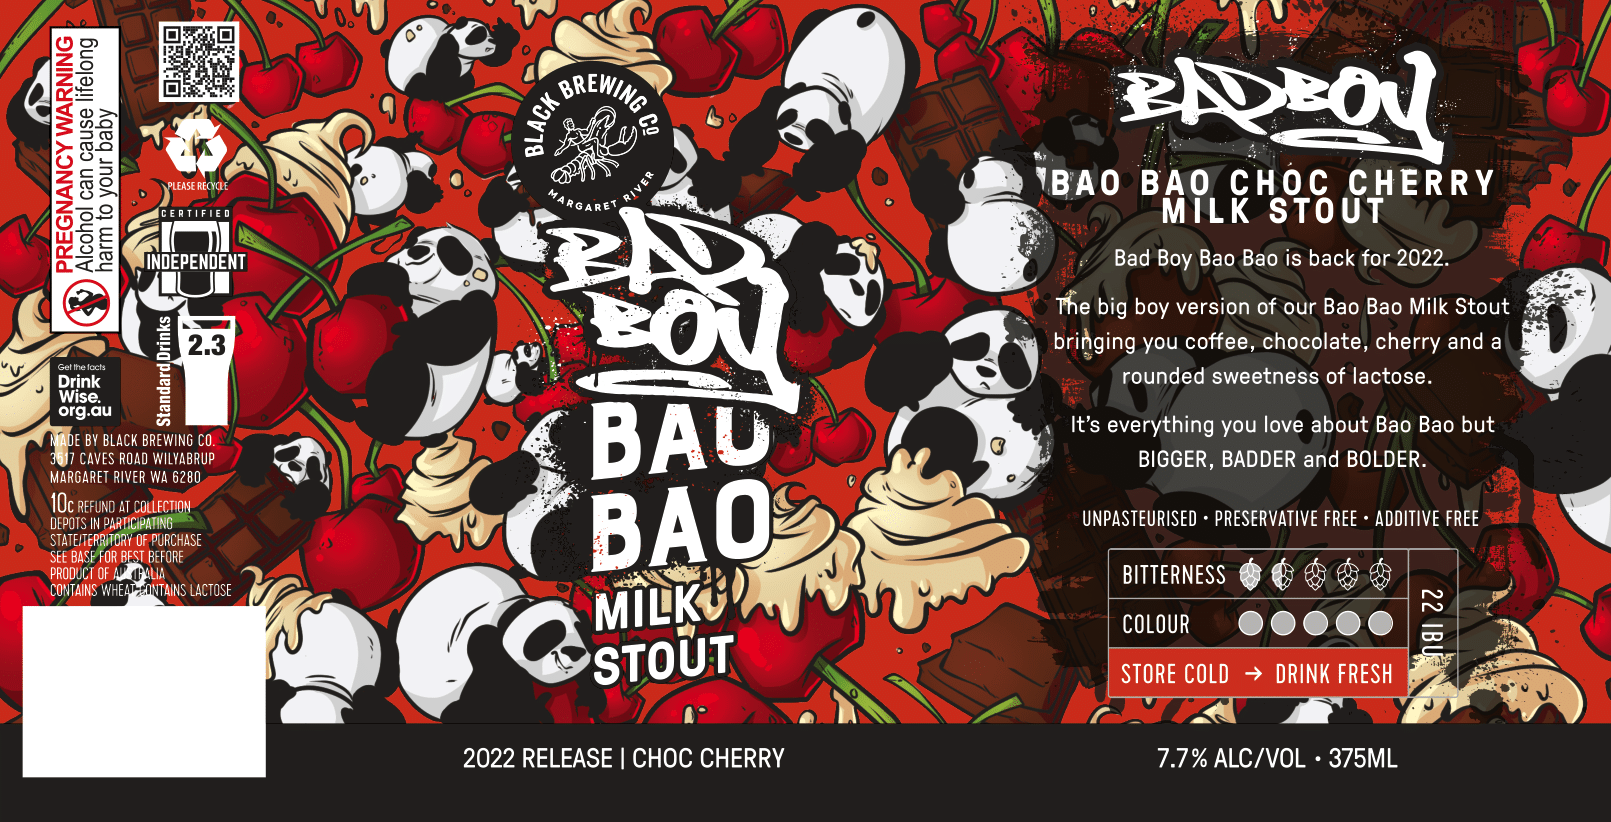 Black Brewing Co – Bad Boy Bao Bao Choc Cherry Stout